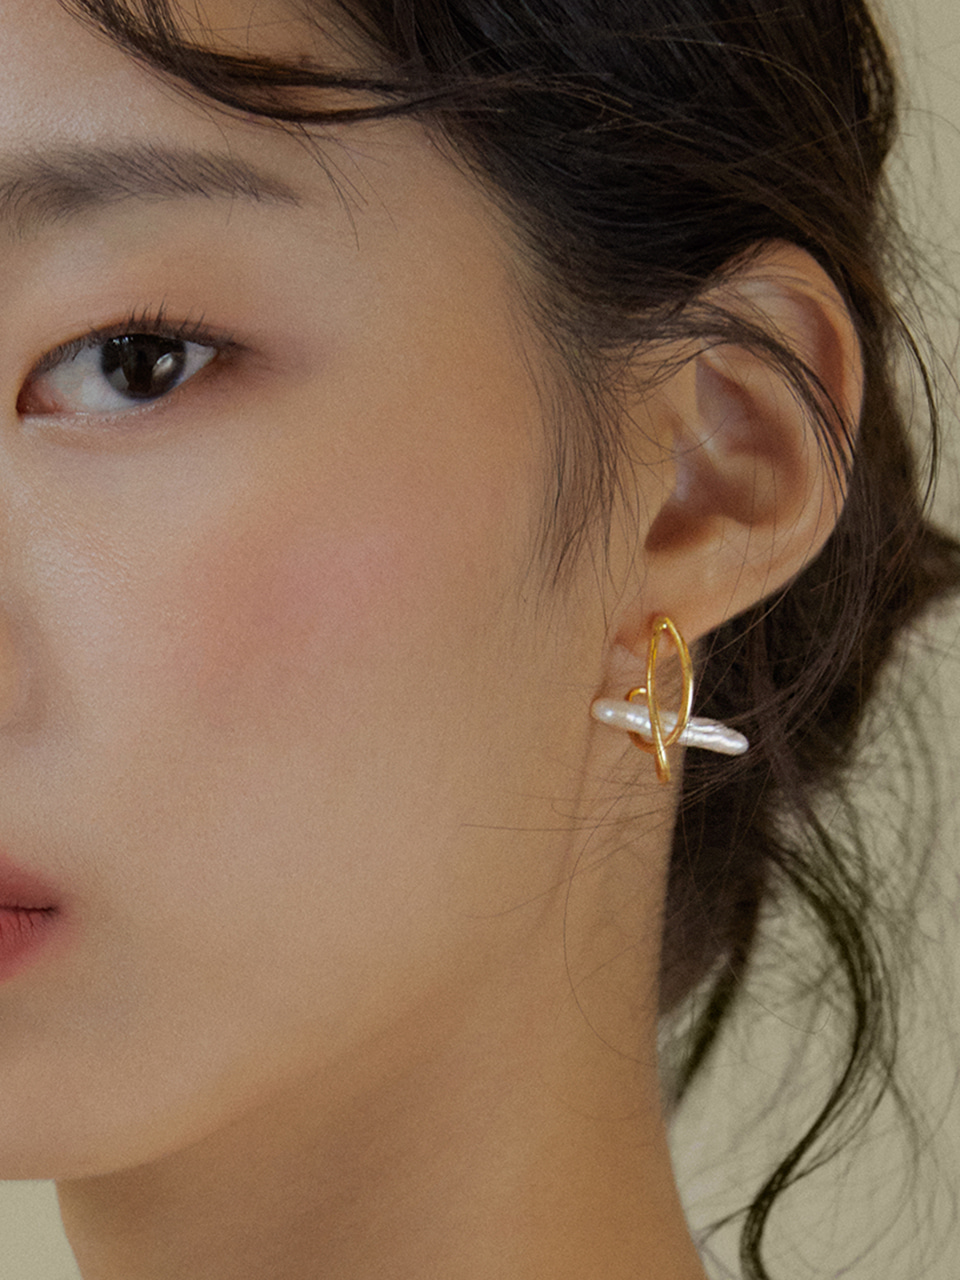 I-pearl earrings(아이-펄 귀걸이)